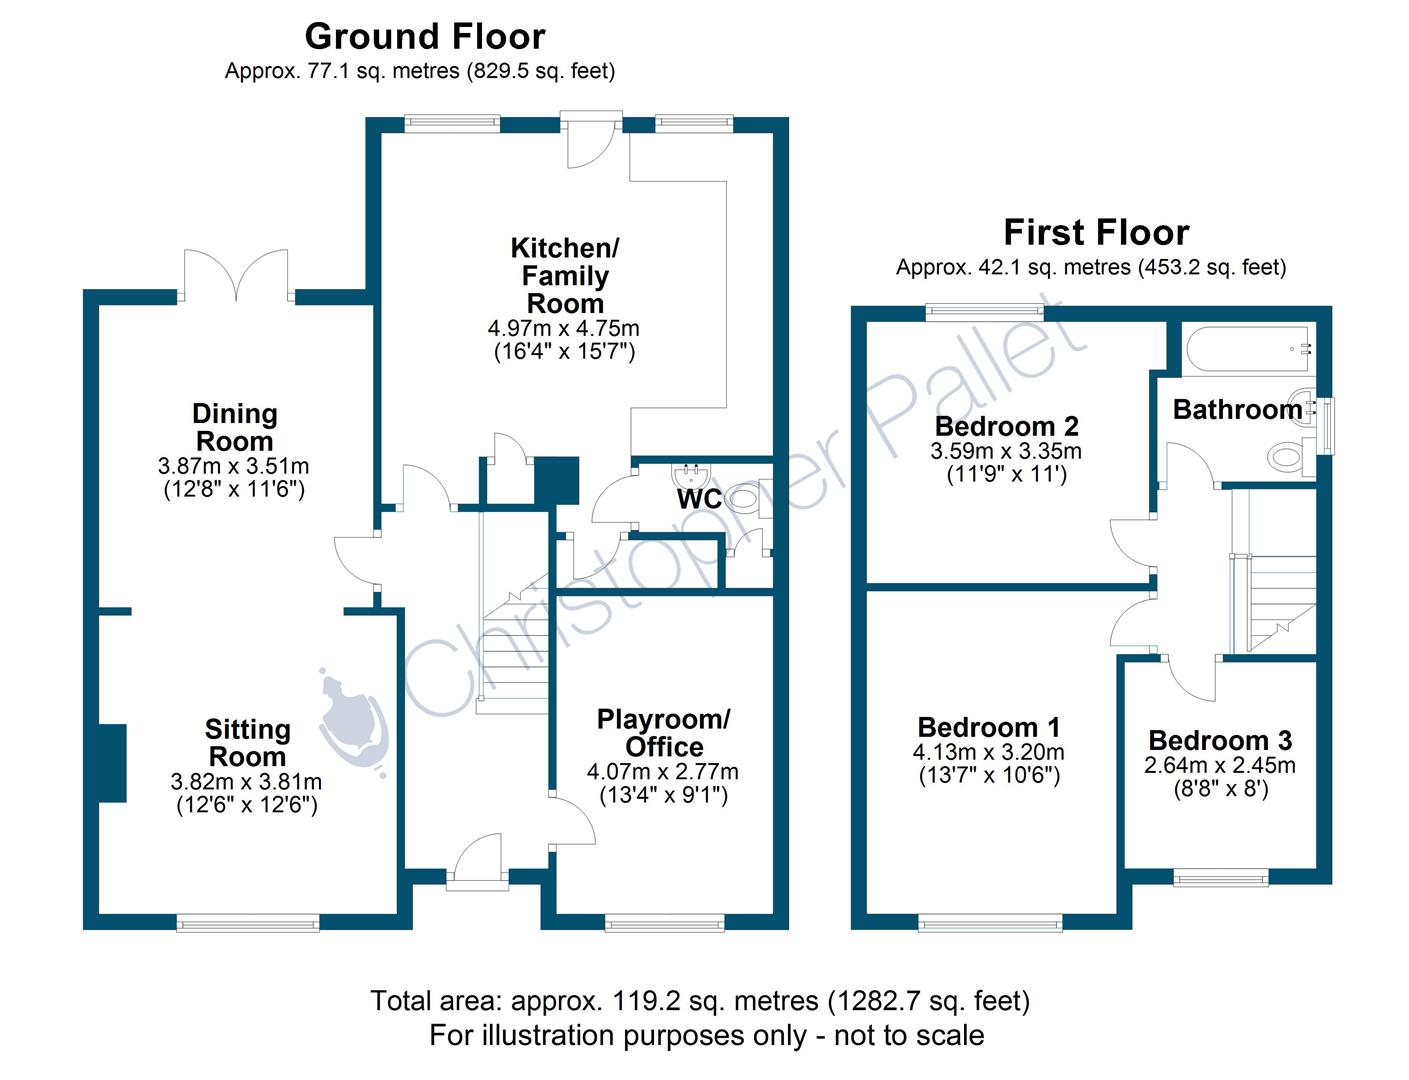 Floorplans For Three Bedroom Semi - Excellent Location